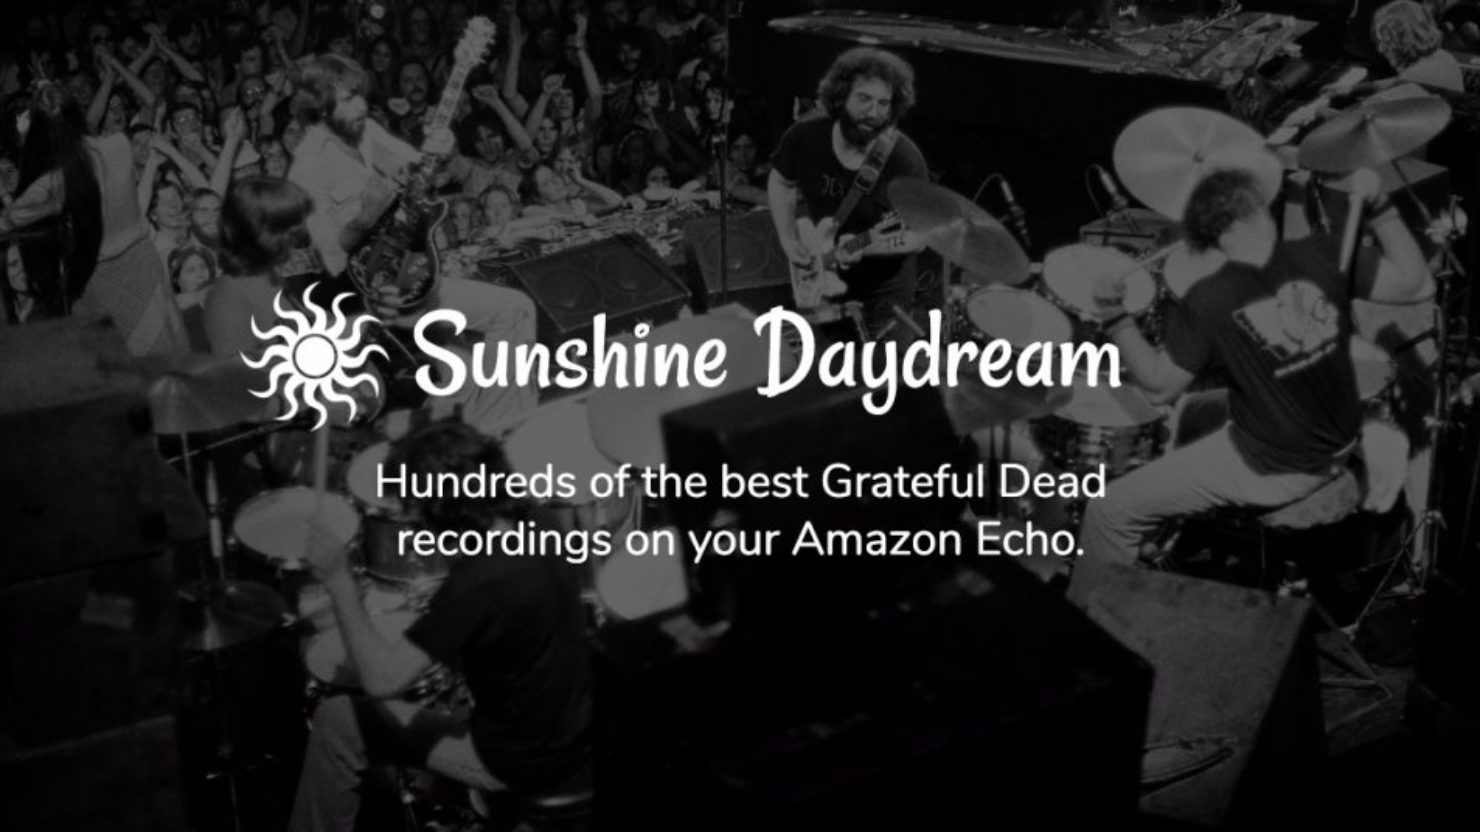 Amazon Echo Adds Sunshine Daydream Skill To Stream Live Dead Shows